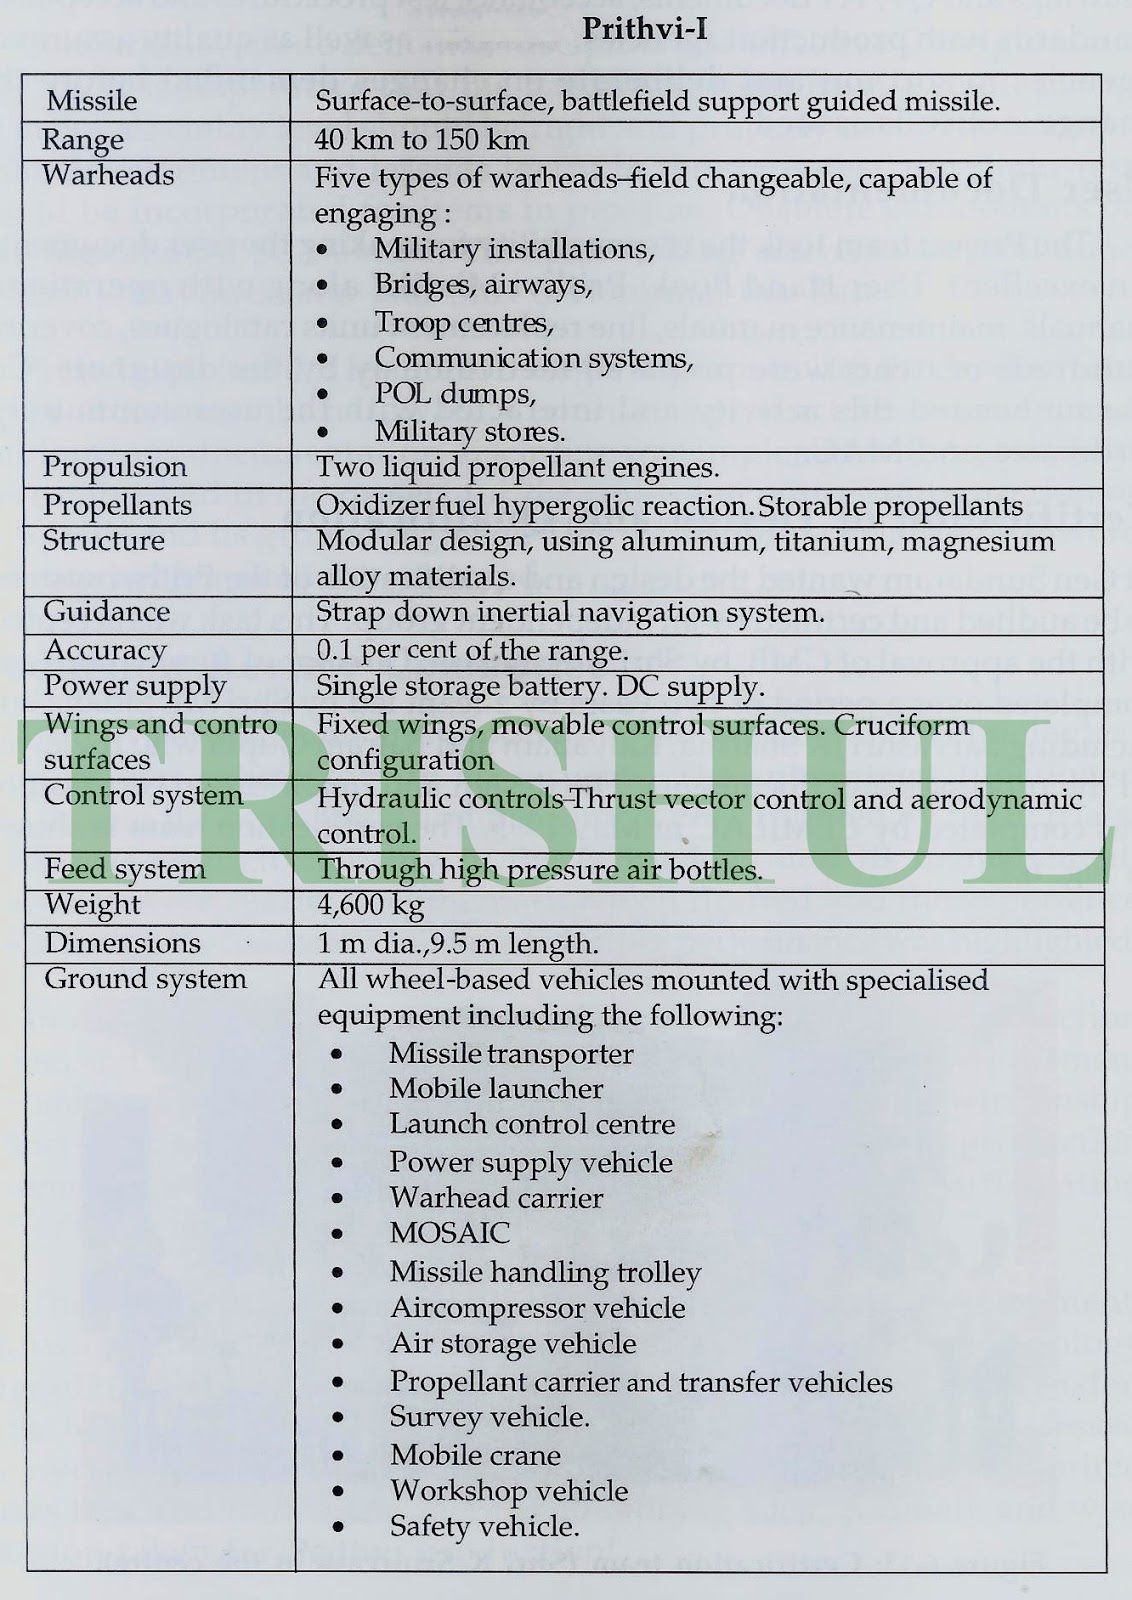 Prithvi-1 Specifications.jpg